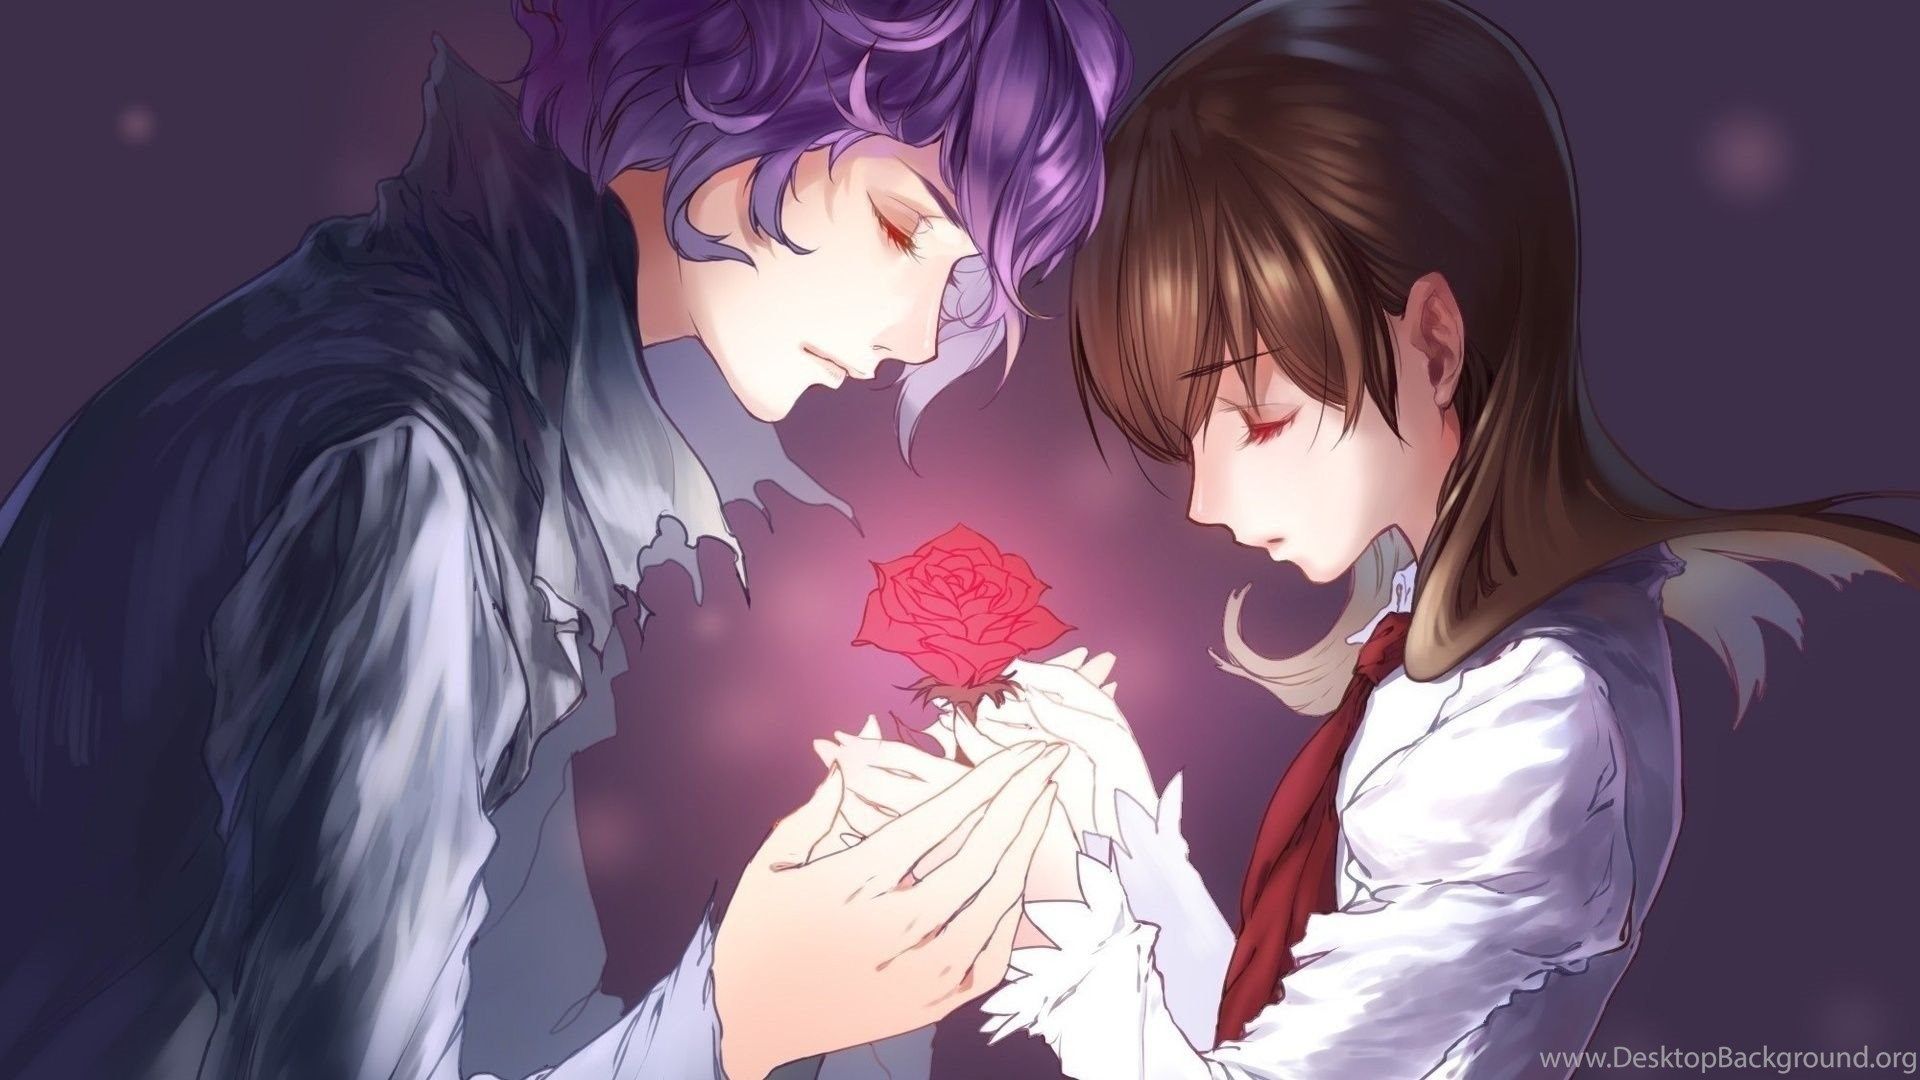 Animated Couple Flowers Love Anime Boy Girl Image Wallpaper Desktop Background